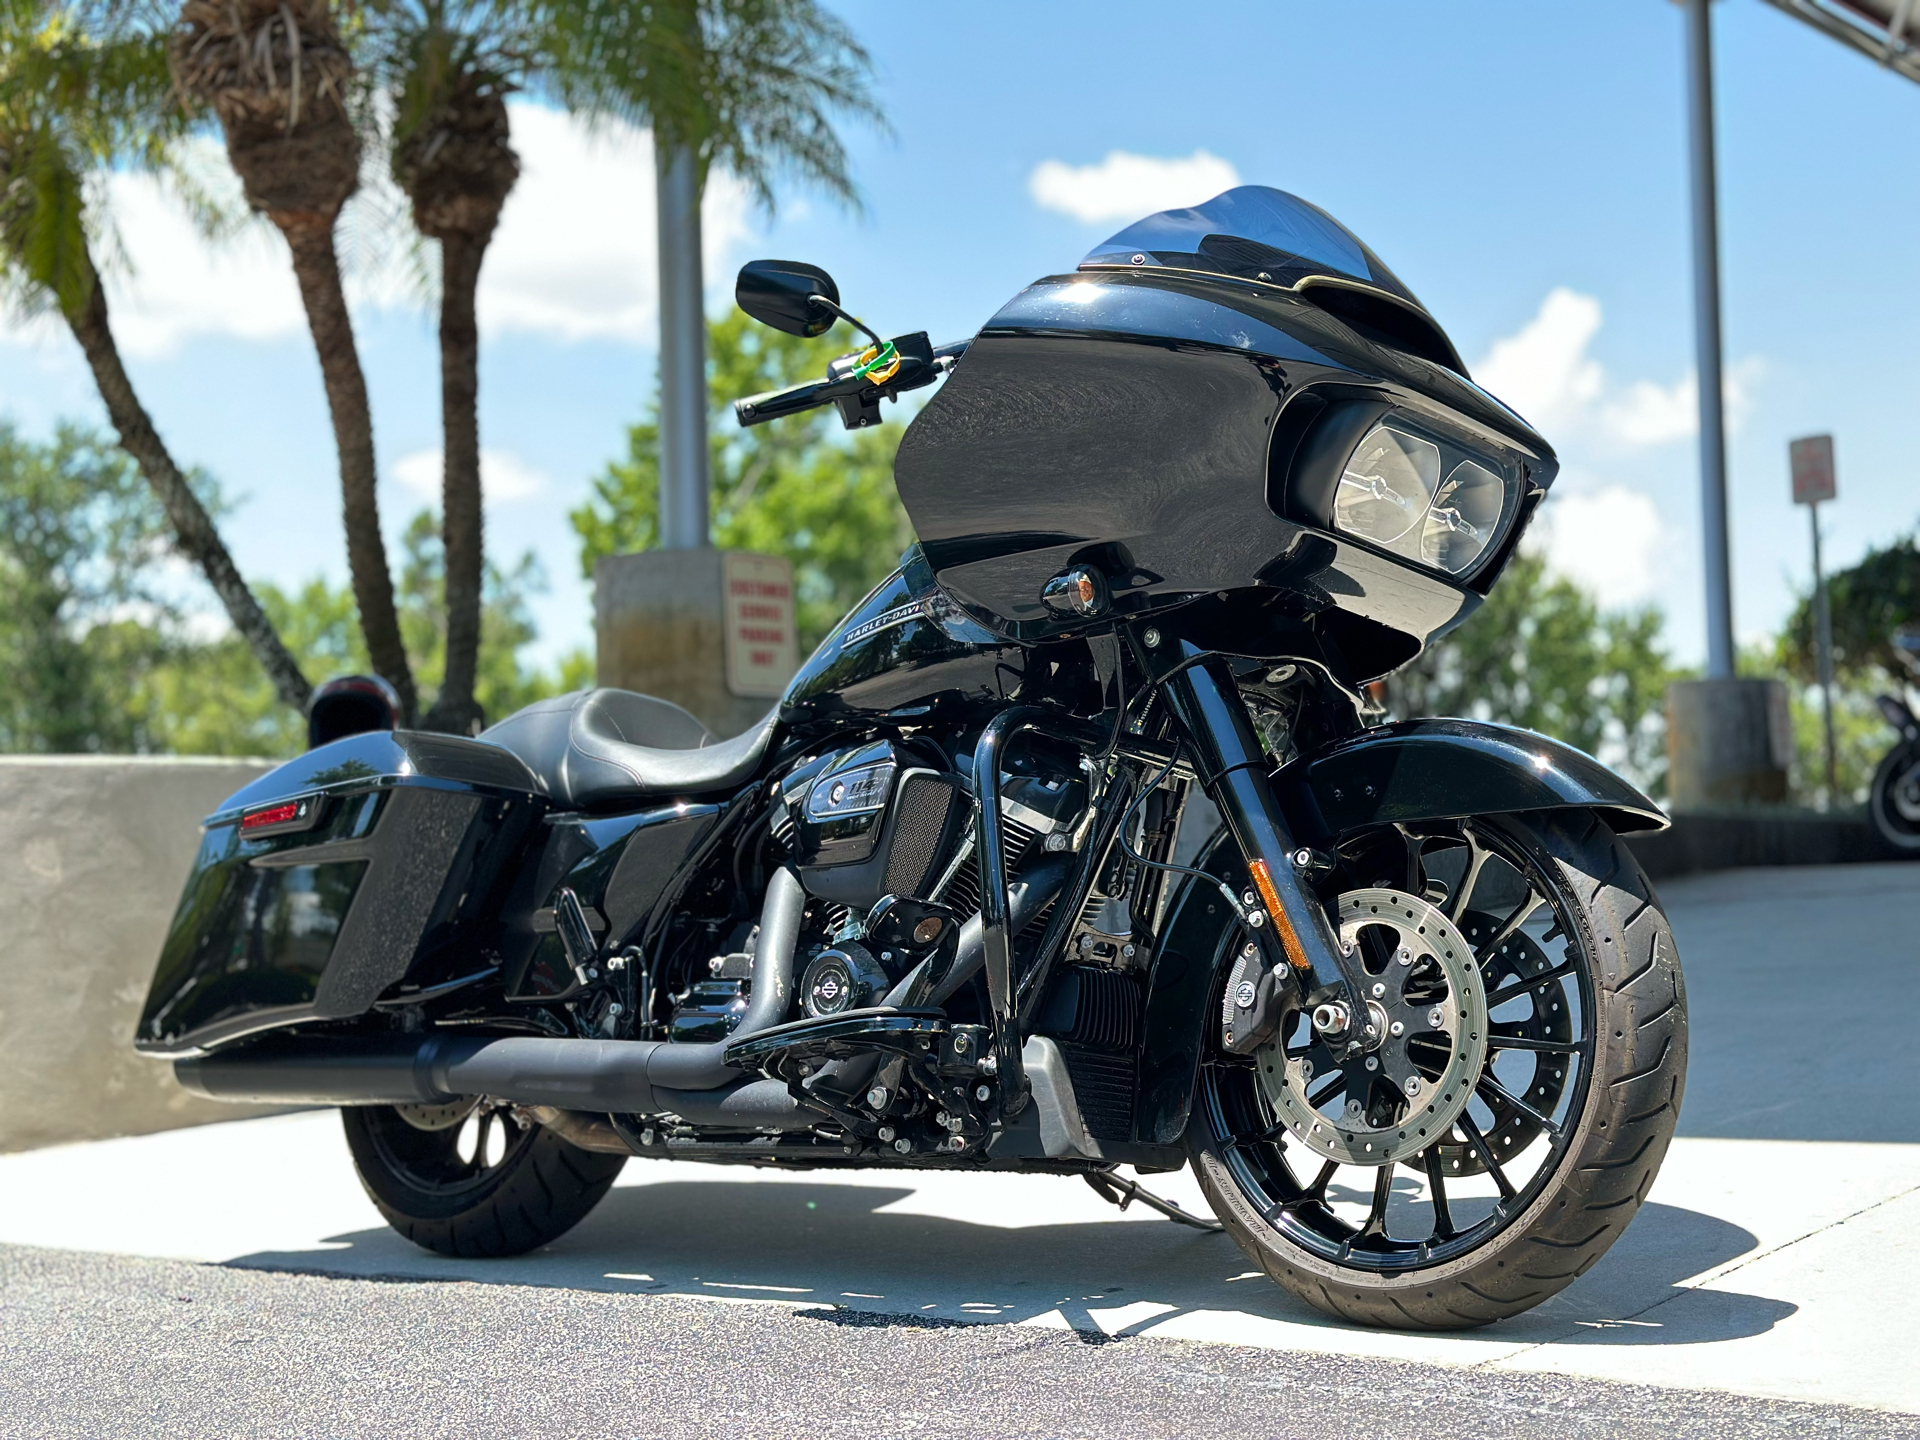 2019 Harley-Davidson Road Glide® Special in Sanford, Florida - Photo 2